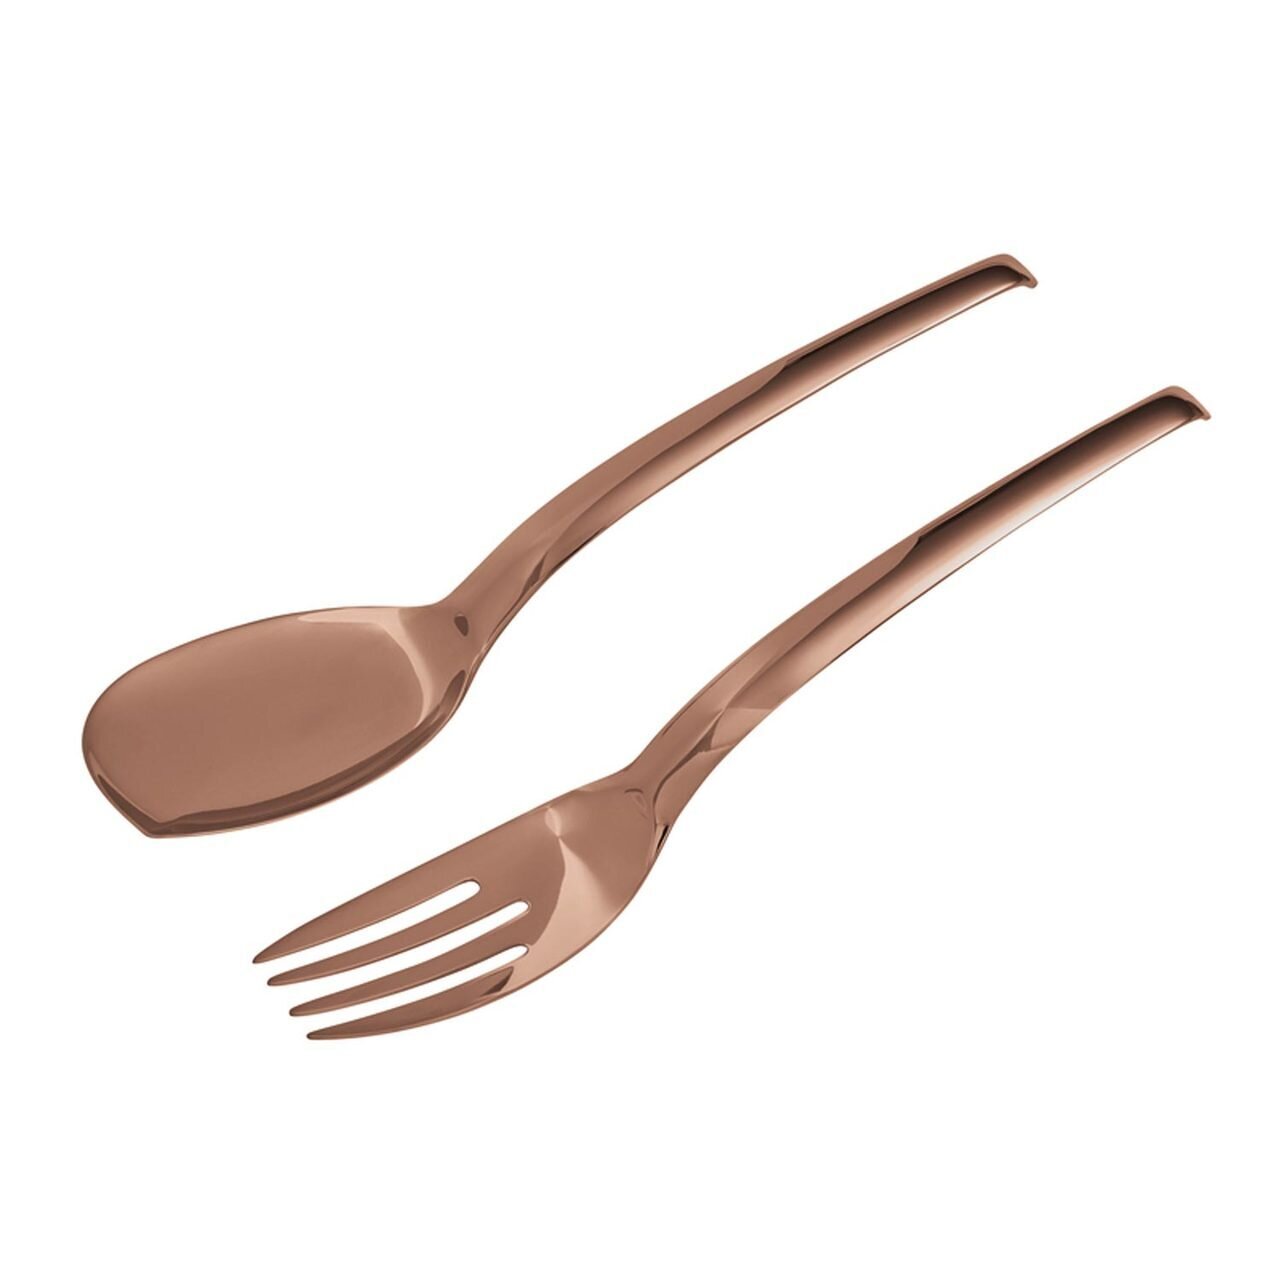 Sambonet Living Serving Spoon And Fork Set 52750R44